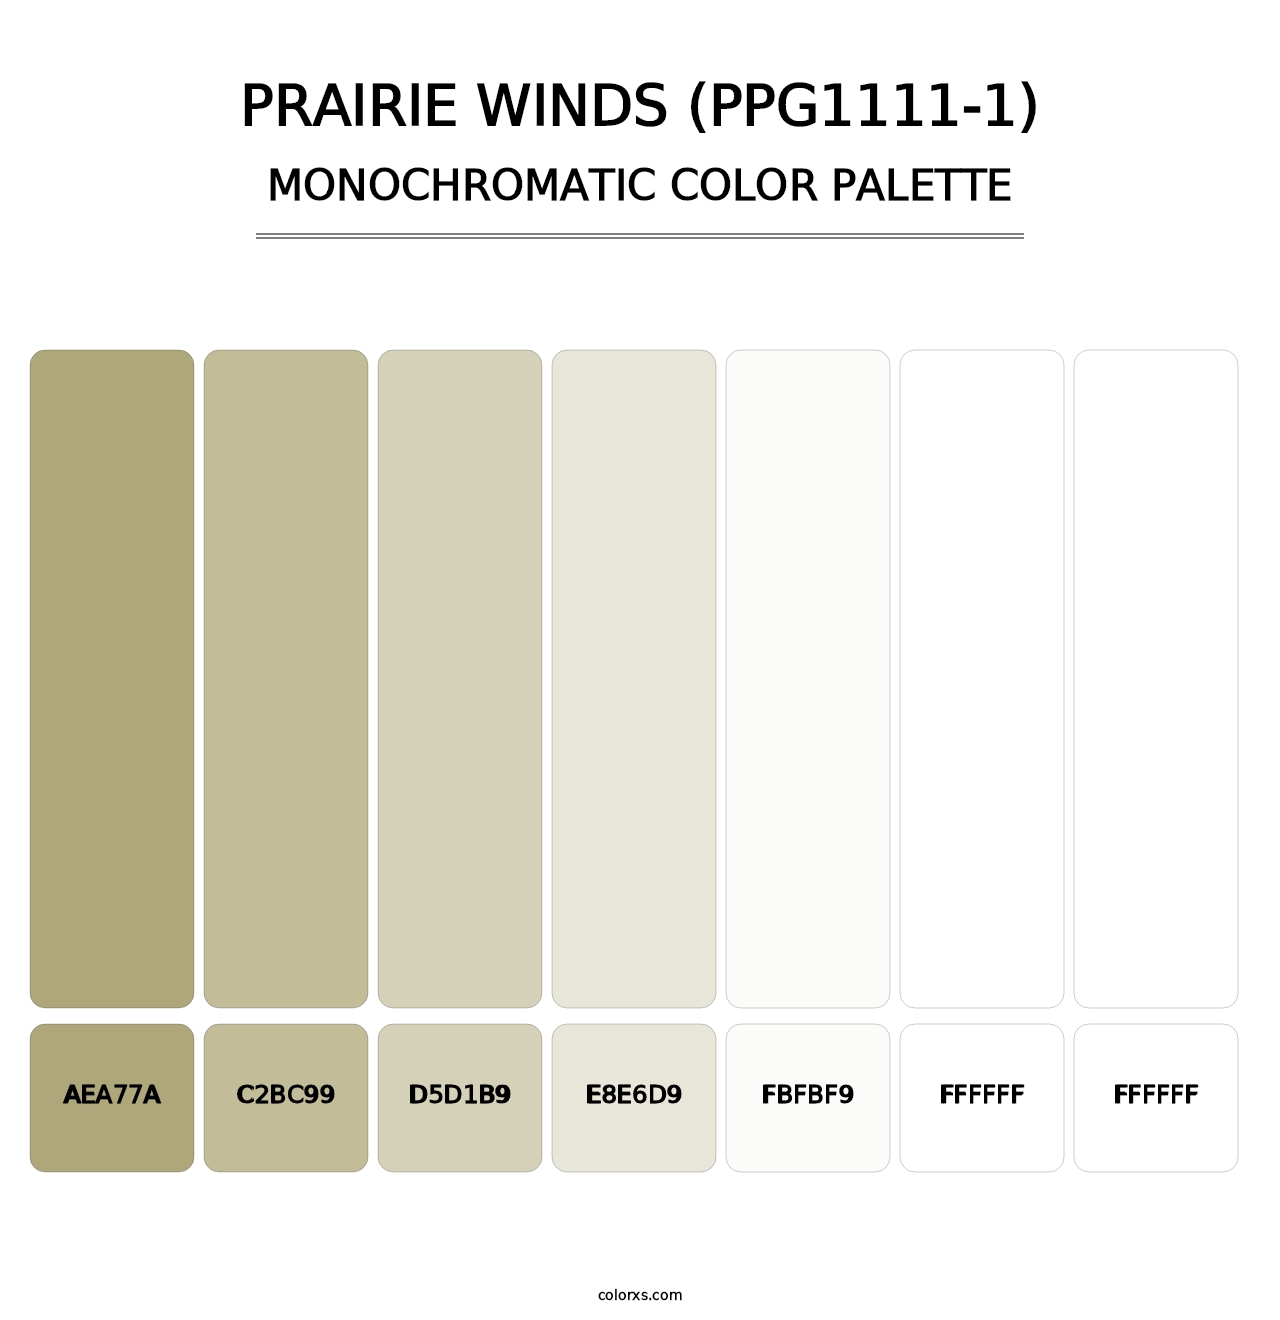 Prairie Winds (PPG1111-1) - Monochromatic Color Palette